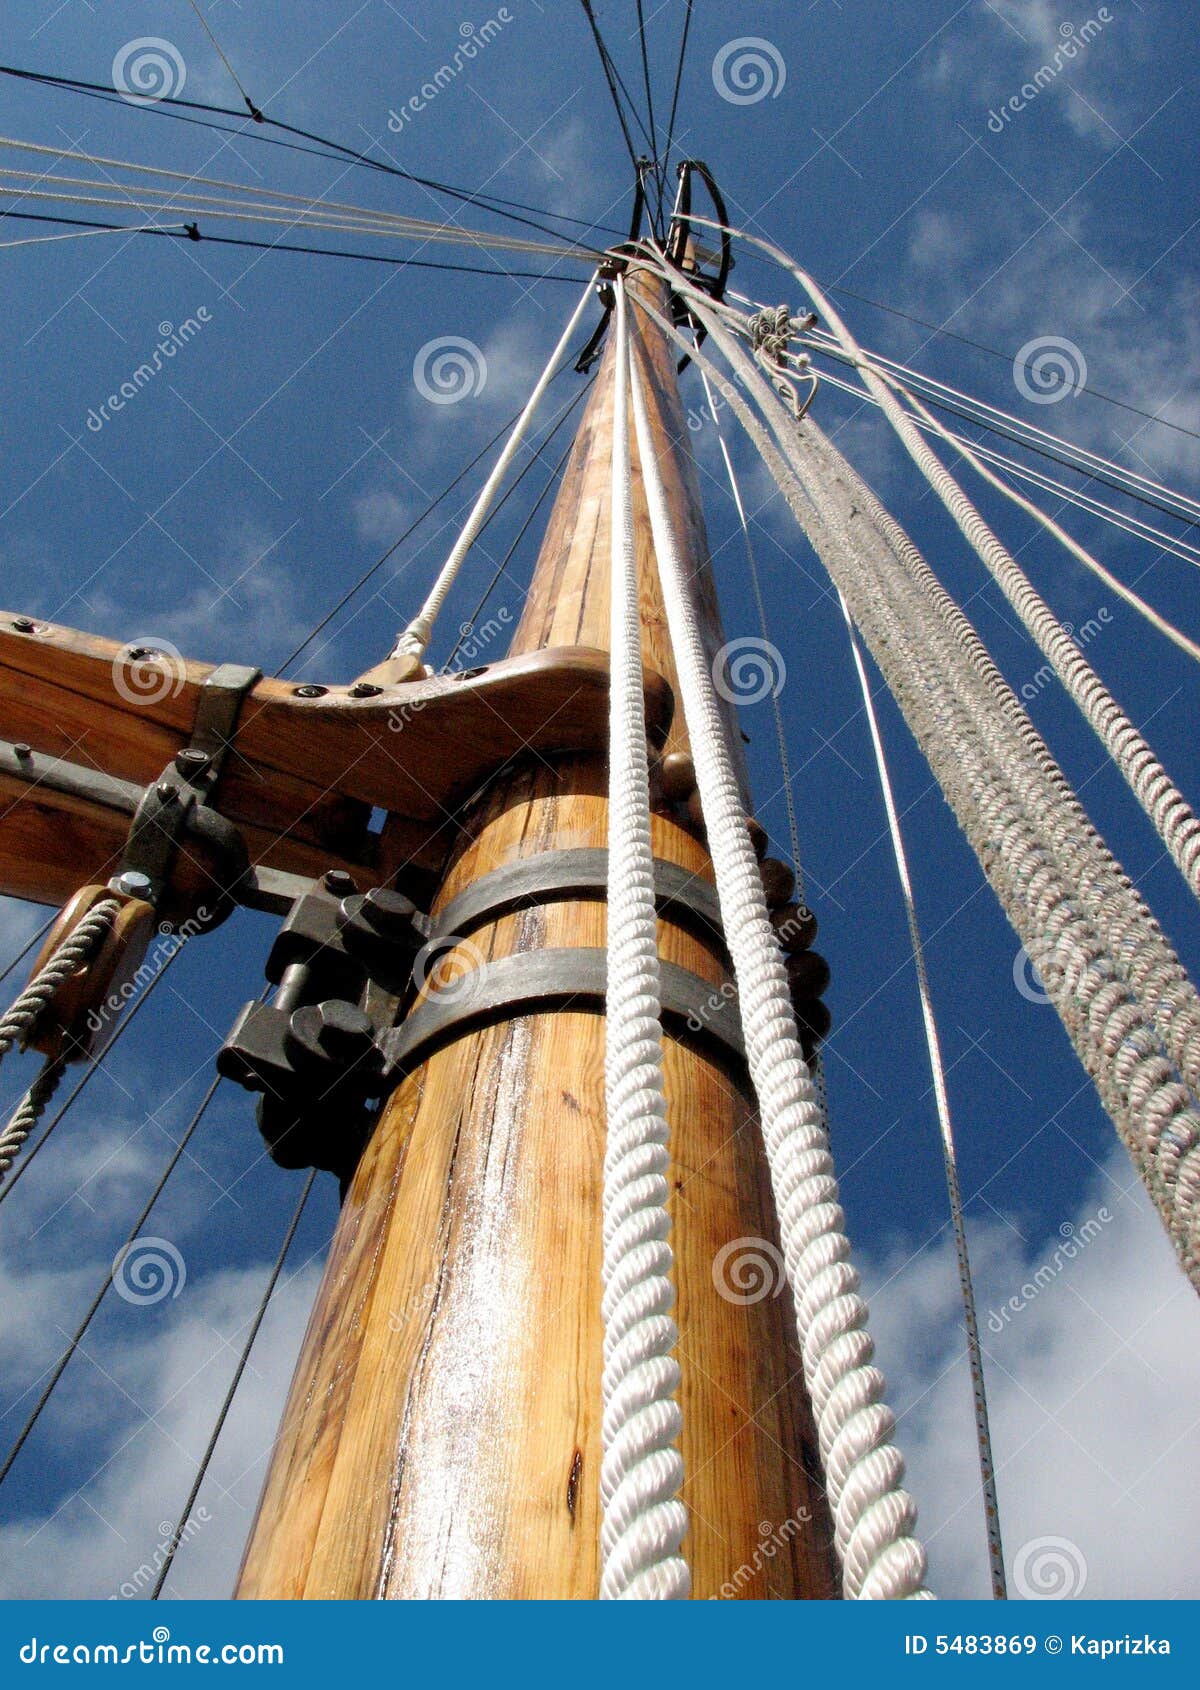 Wooden mast ship stock image. Image of docks, nature, boat ...